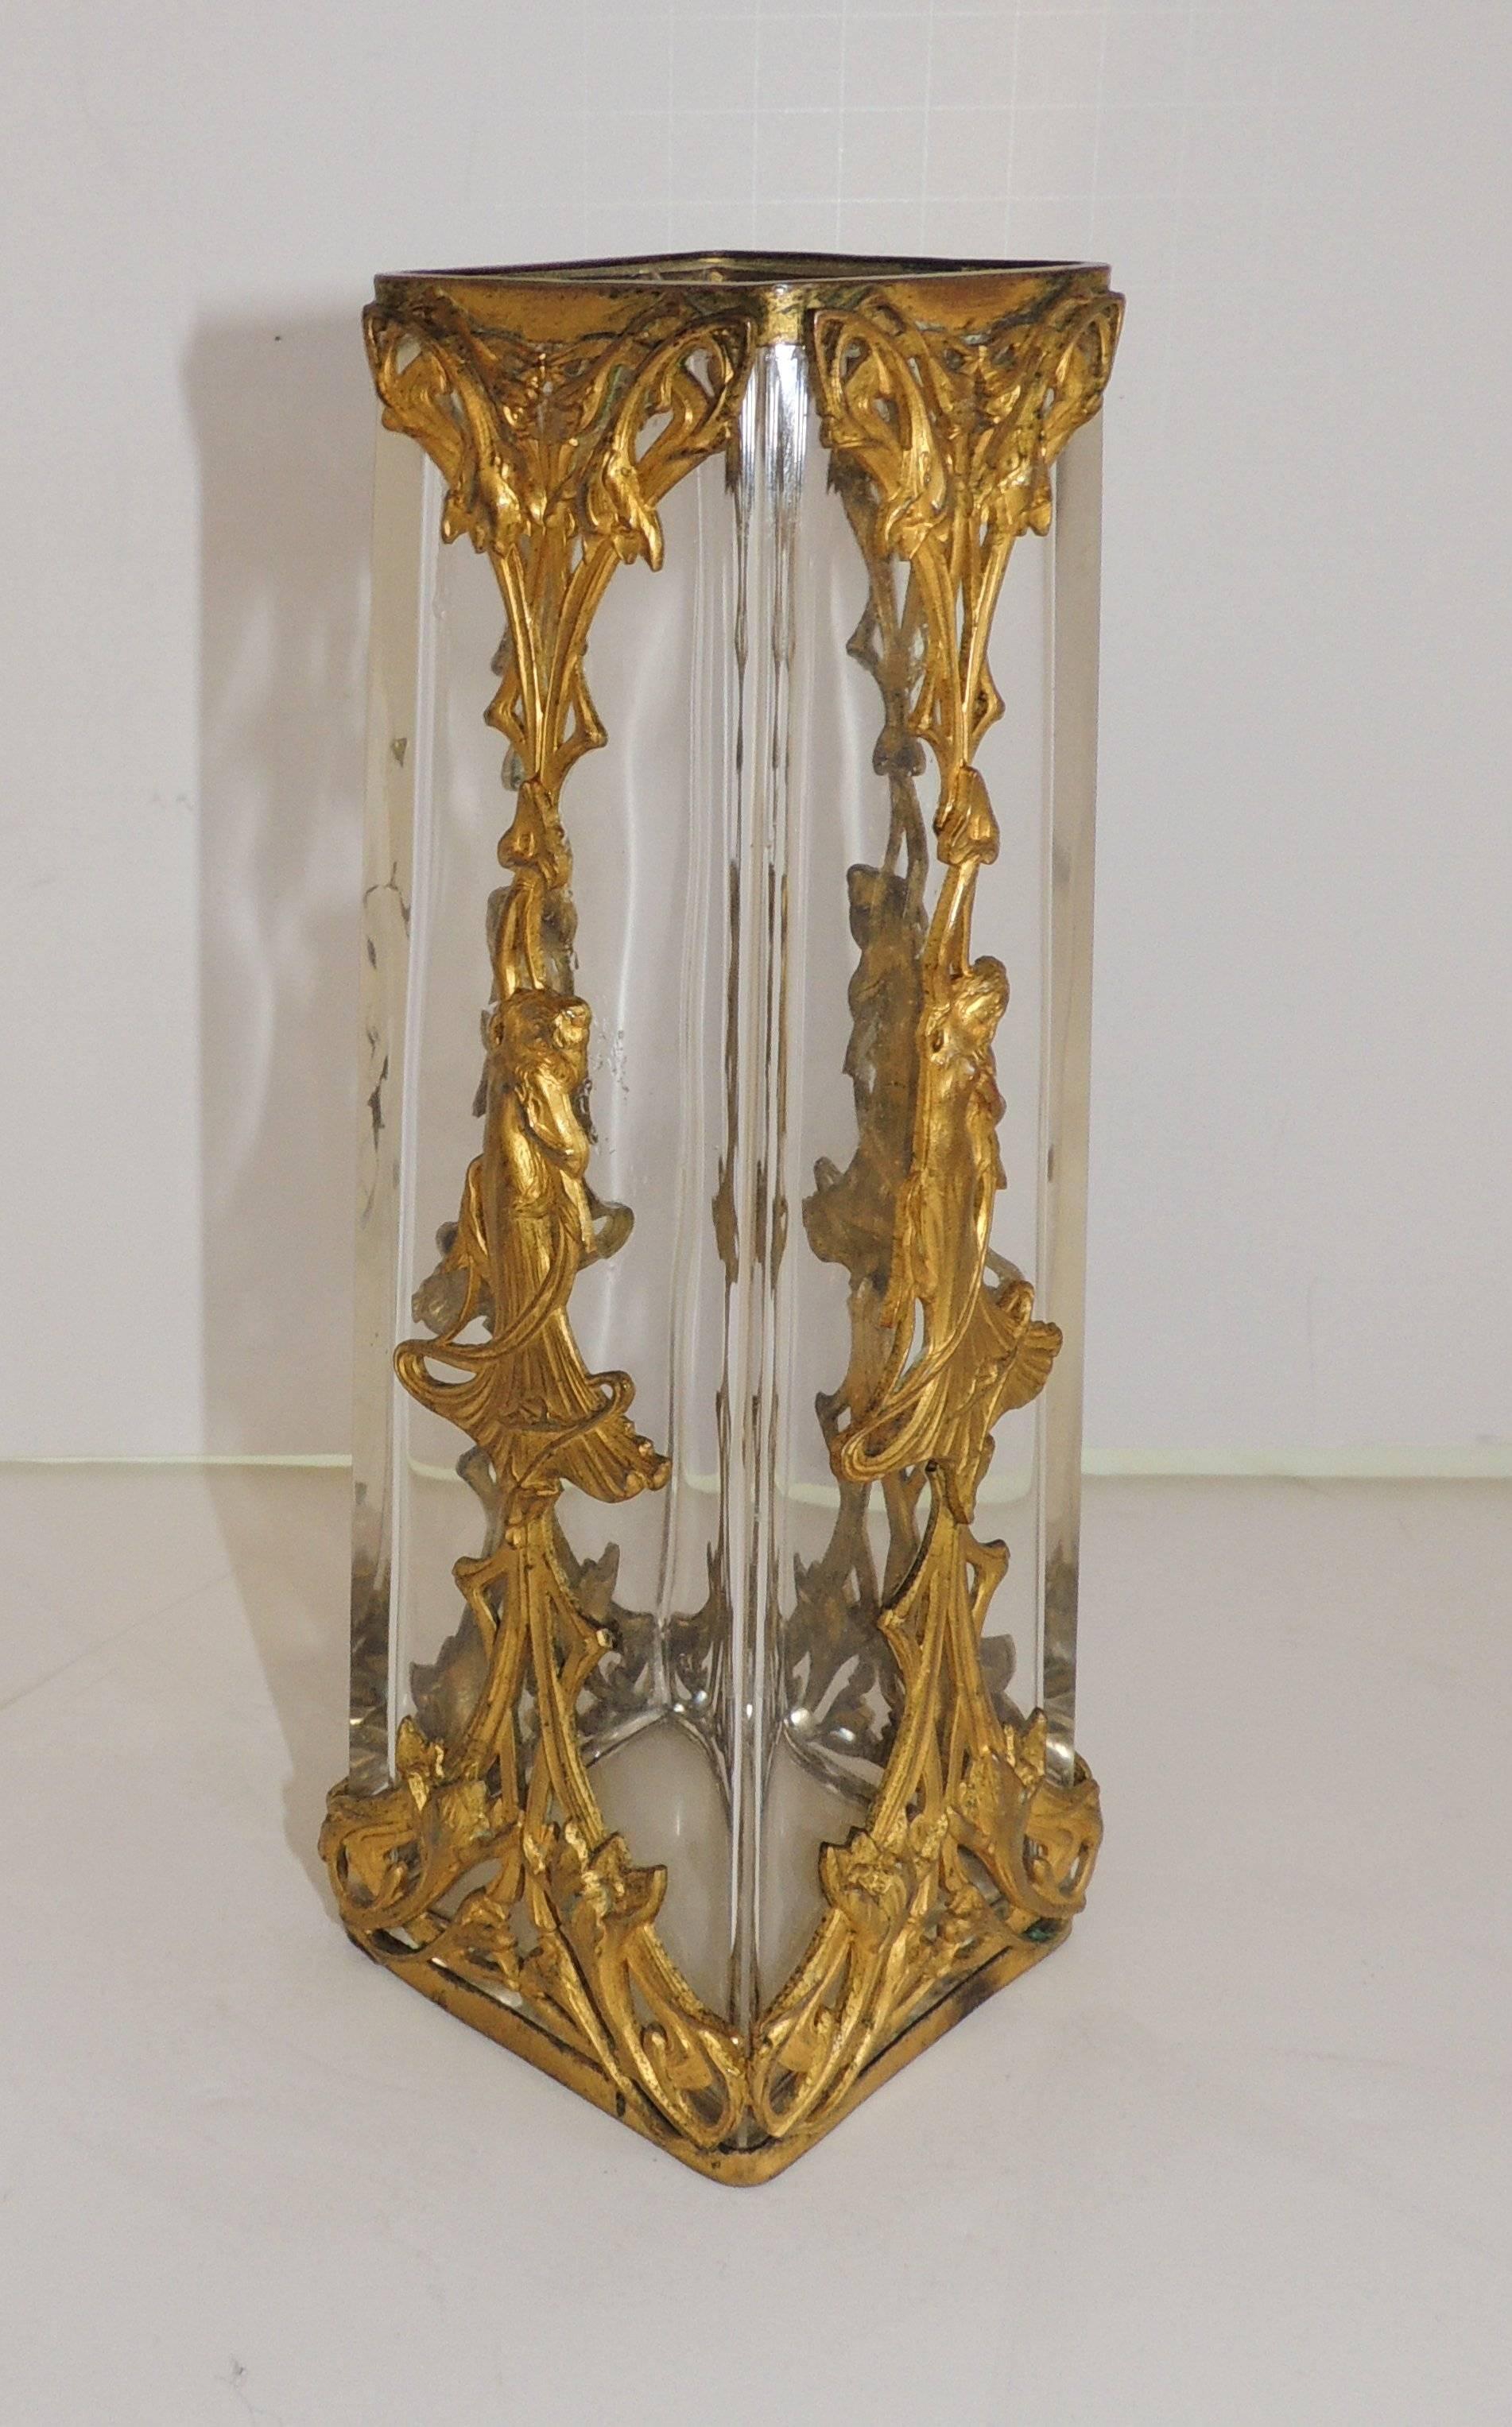 Wonderful French lady figure Art Nouveau ormolu-mounted gilt bronze crystal vase
Measures: 11